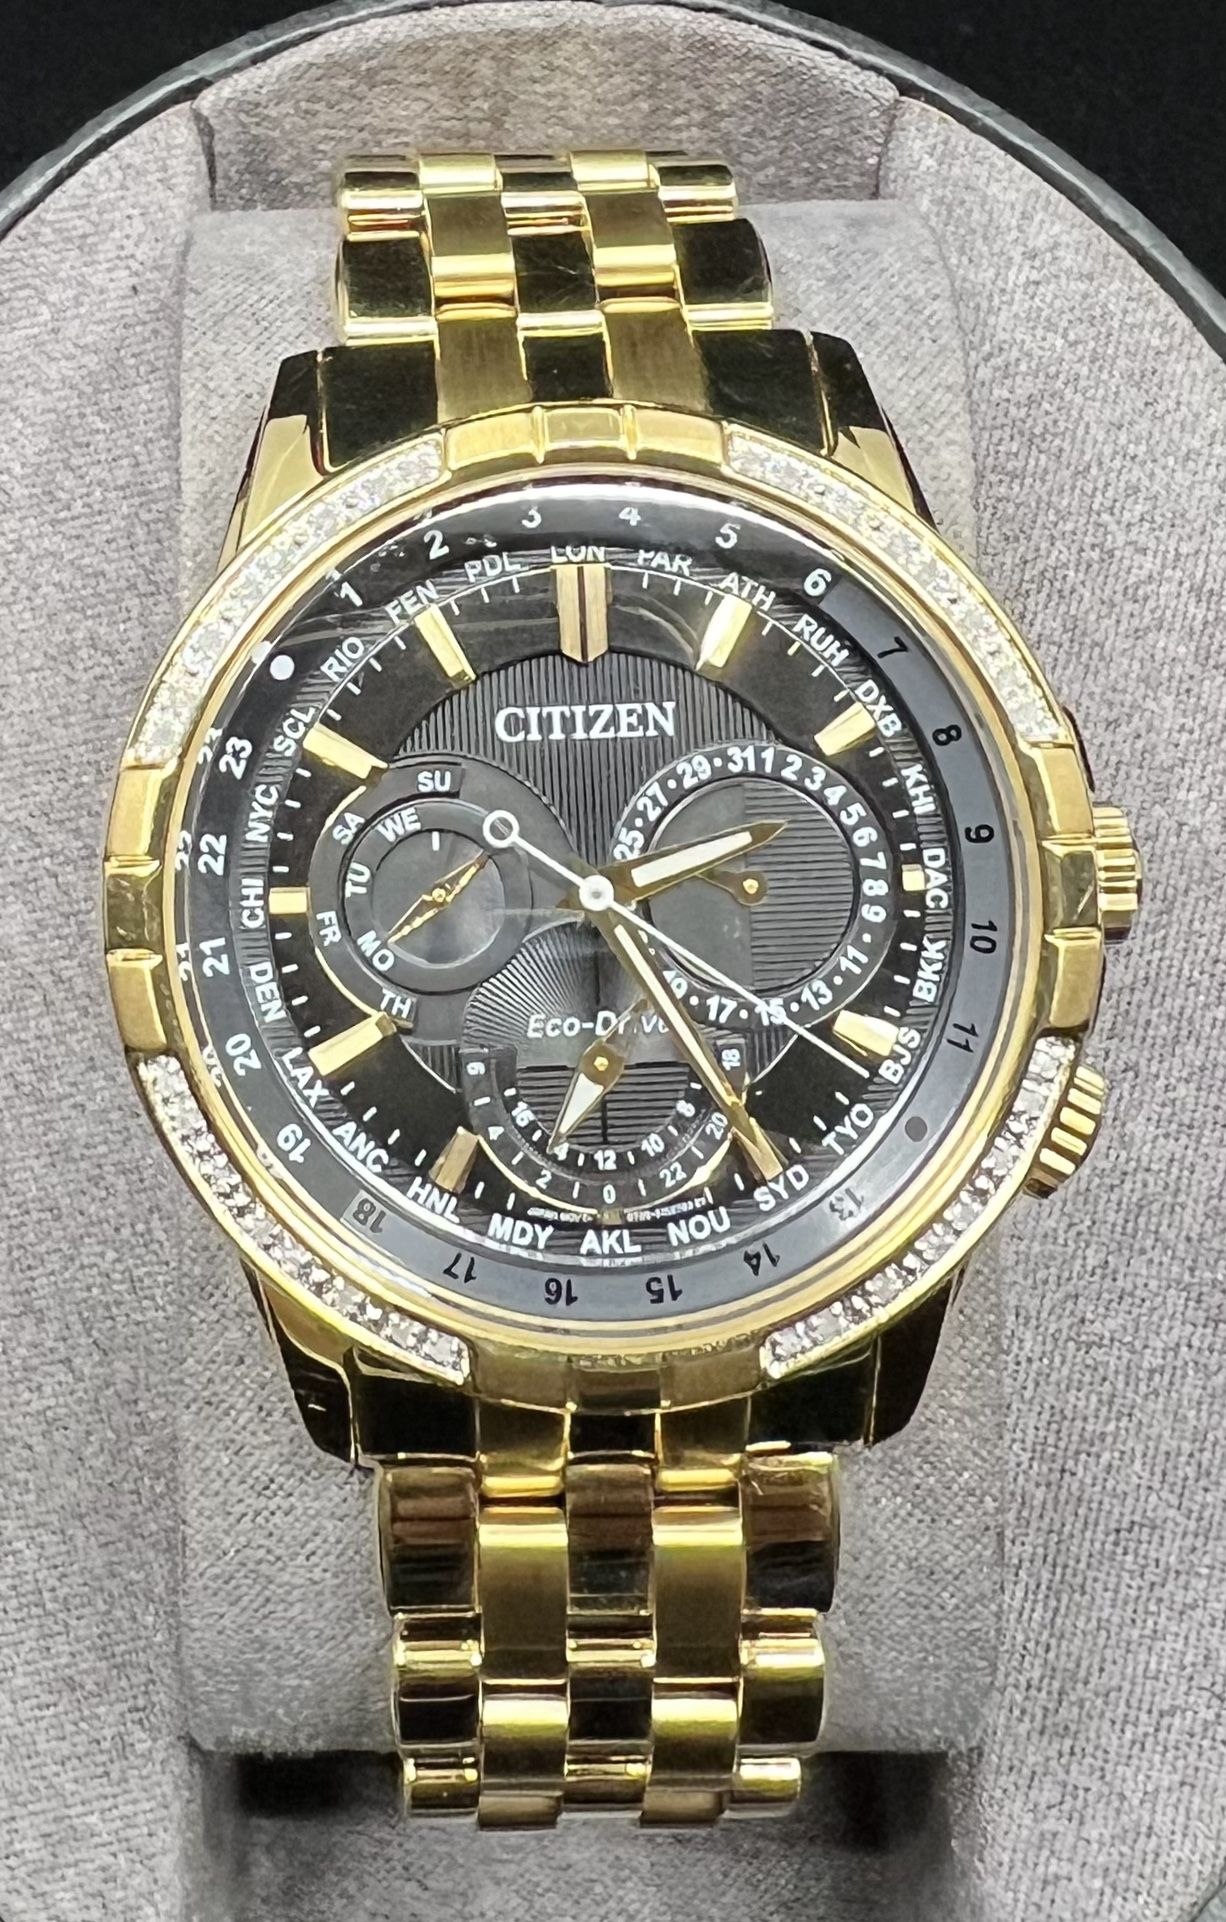 Citizen Watch 